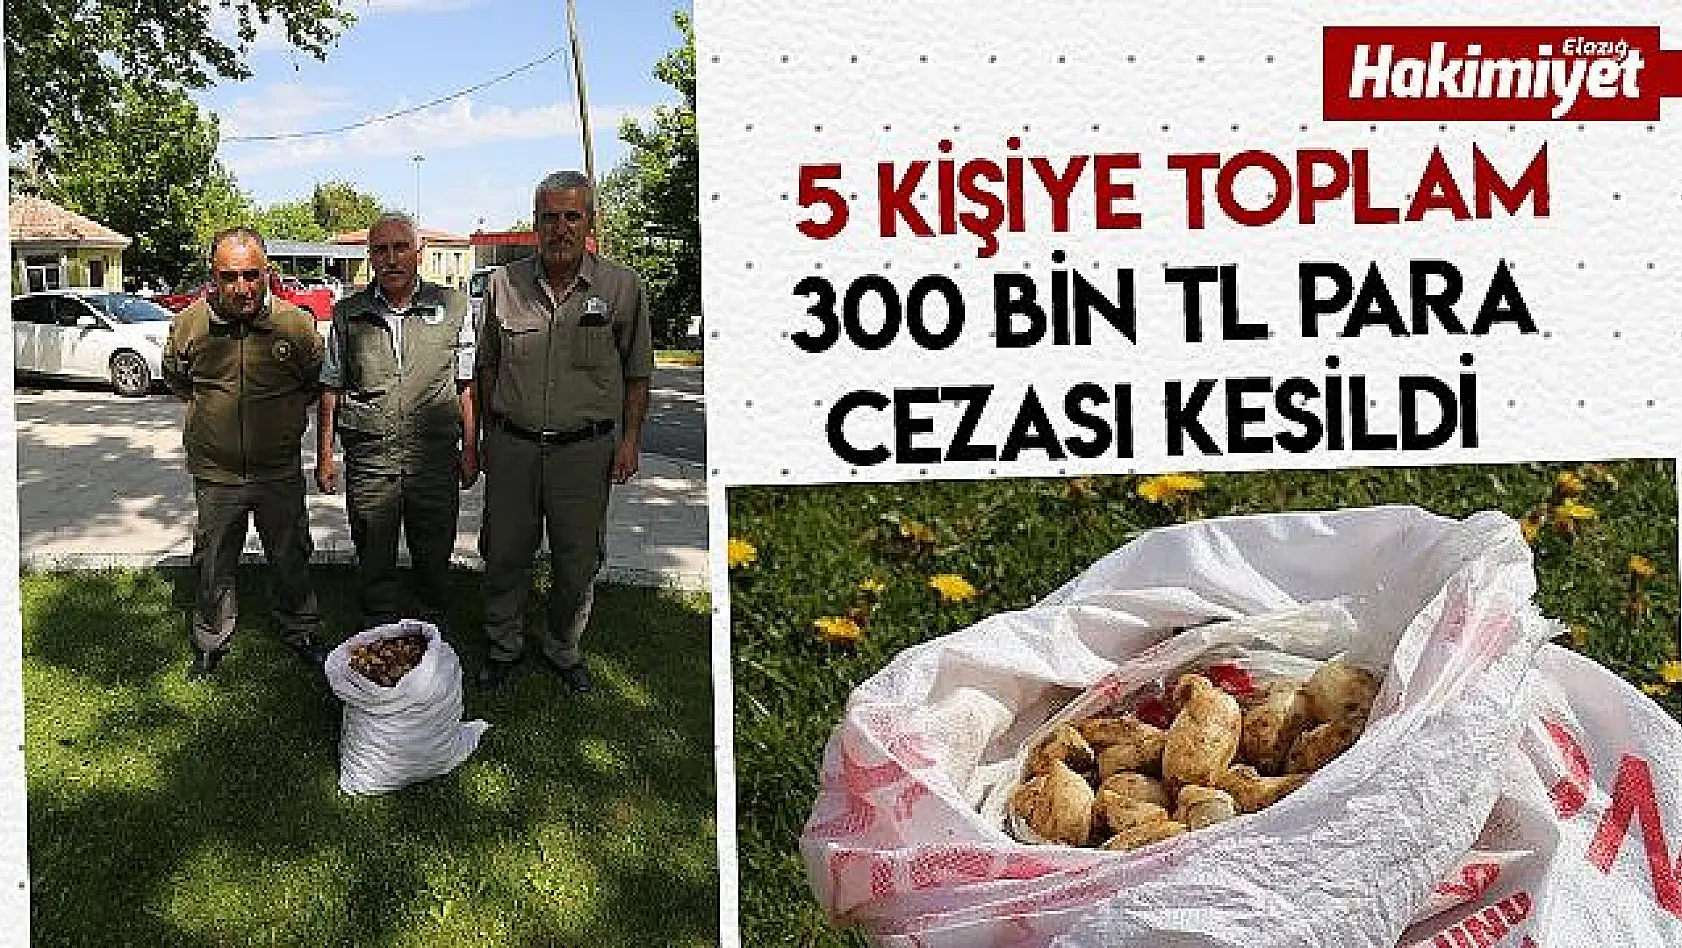  25 kilo salep soğanına 300 bin TL ceza kesildi